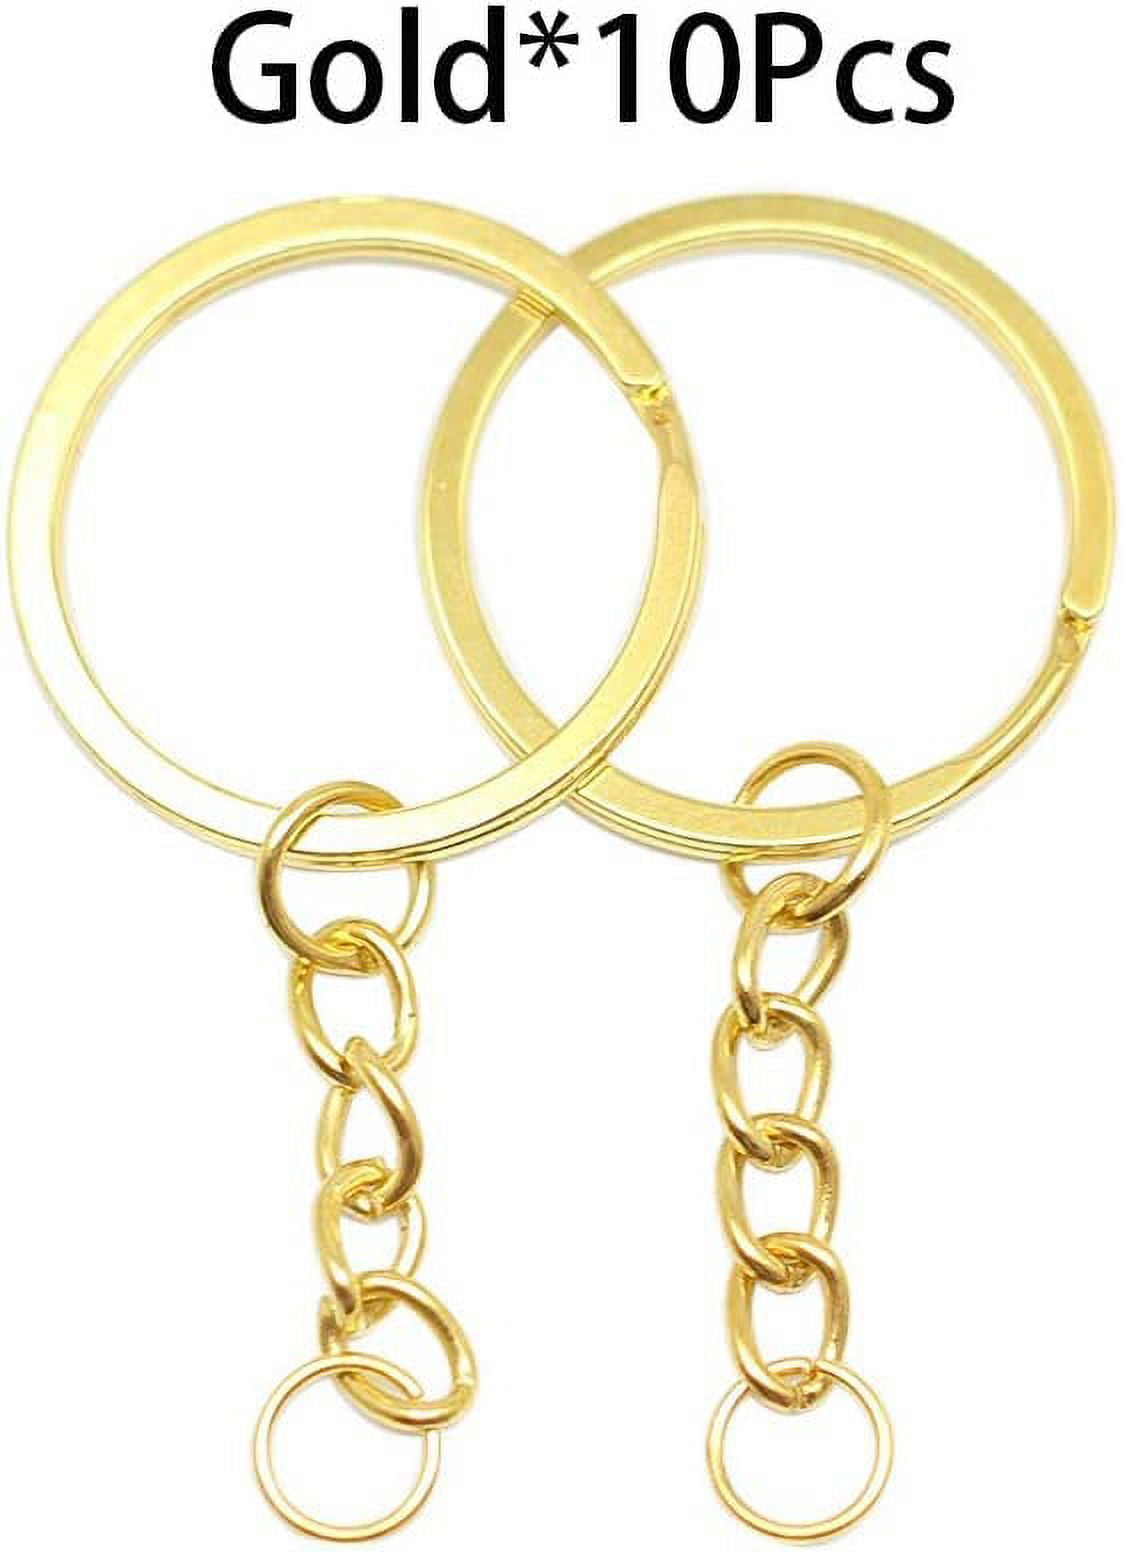 Loren 5 Pcs 2.5 cm Split Key Ring with Chain, Gold